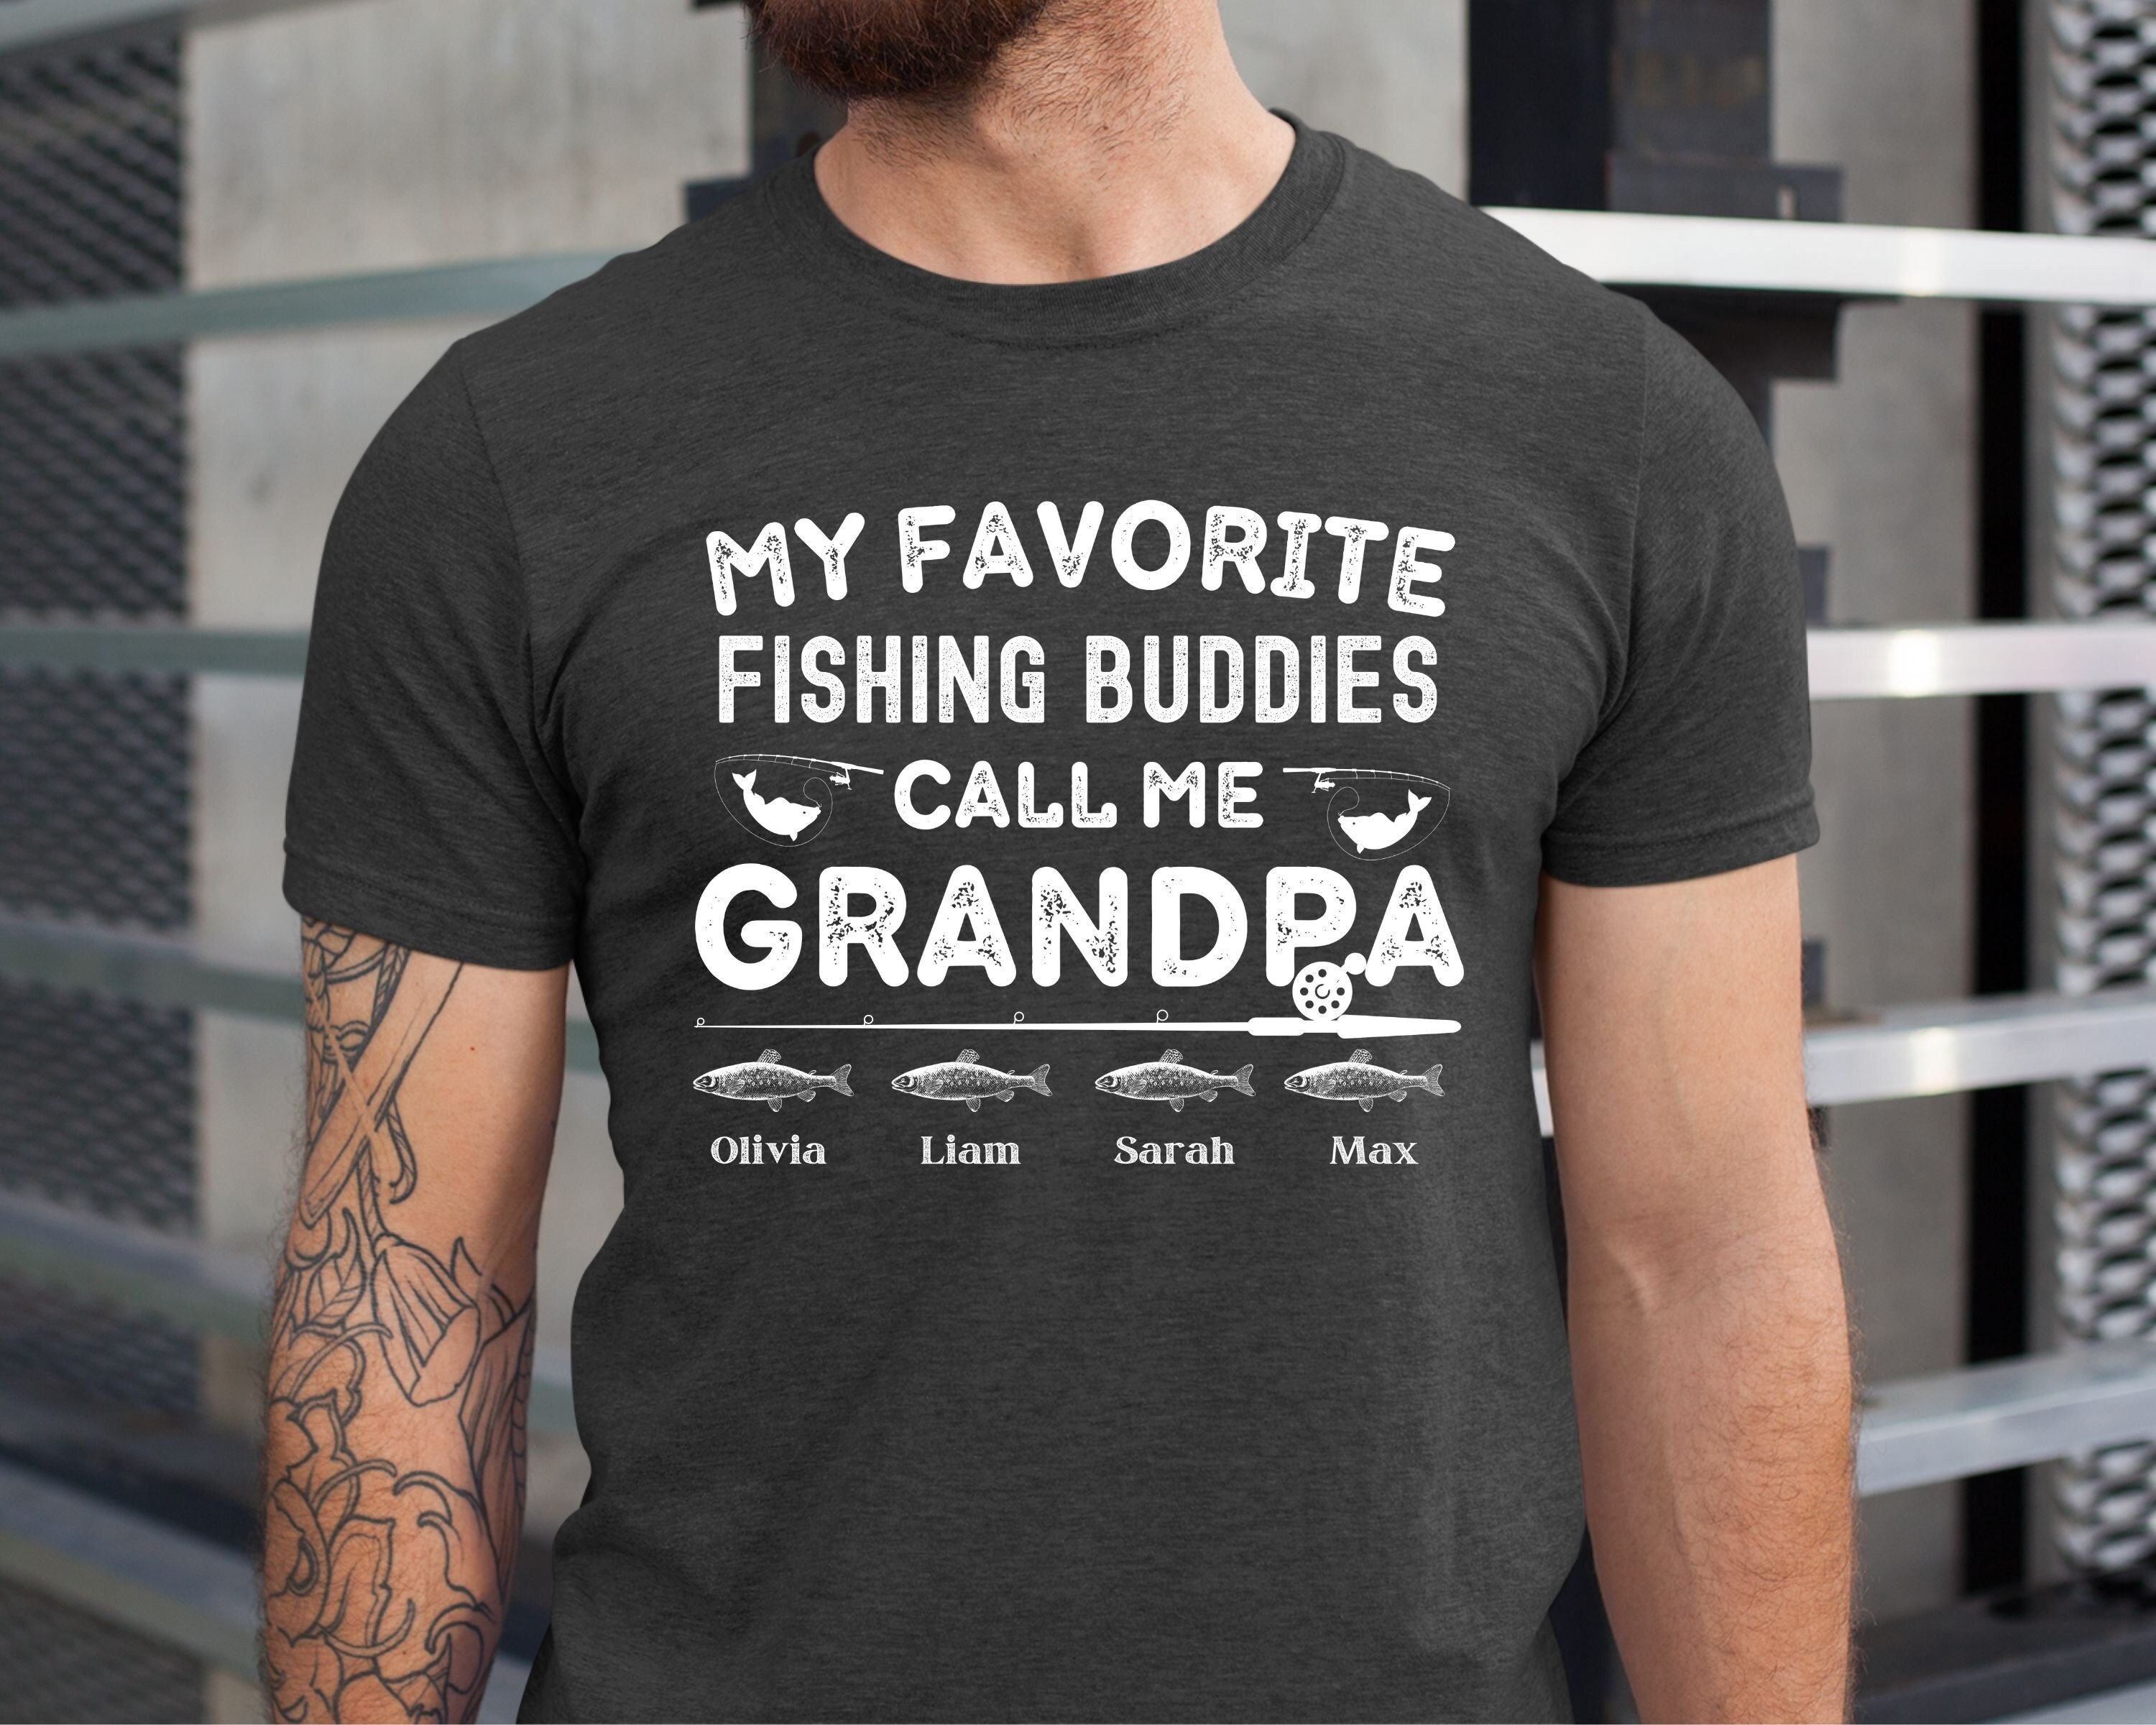 My Favorite Fishing Buddies Call Me Grandpa, Personalized Grandpa Shirt with Grandkids Name, Gift for Grandpa, Fathers Day Gift, Papa Shirt